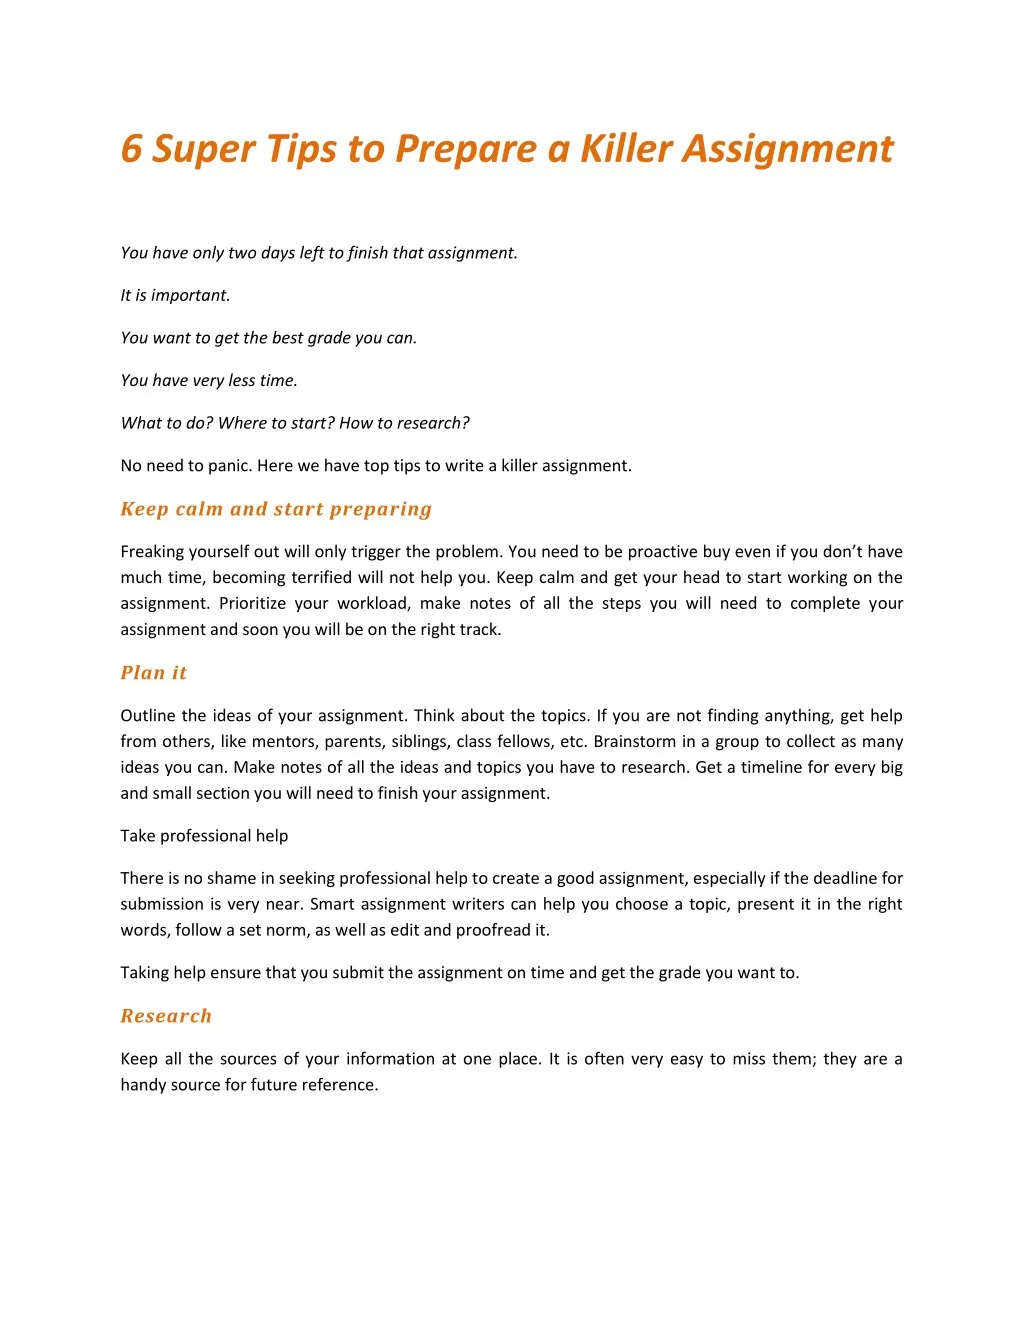 6 super tips to prepare a killer assignment